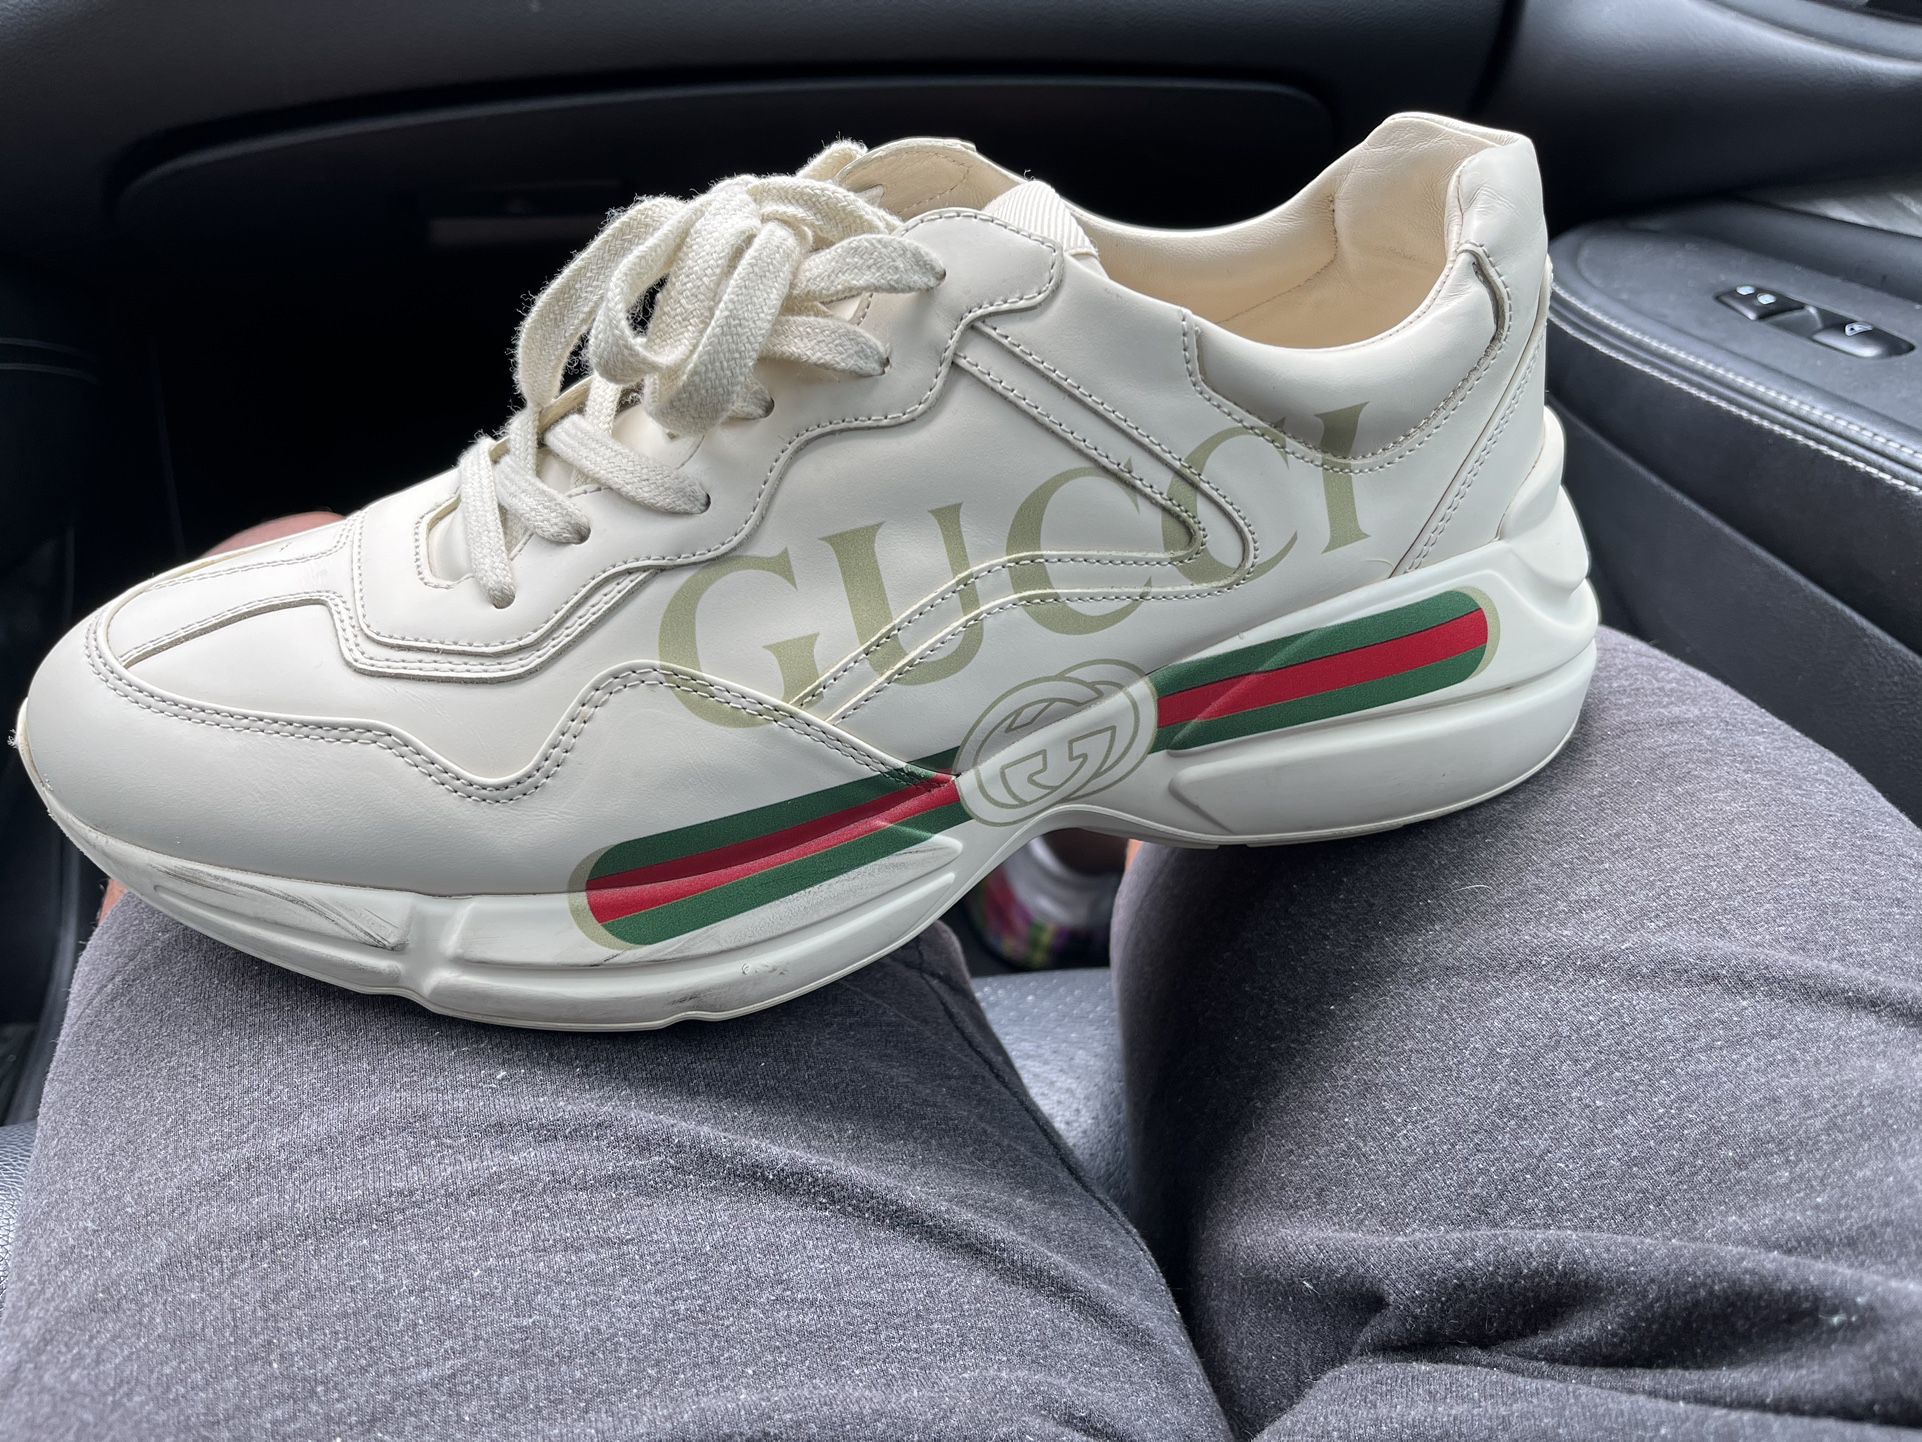 Gucci Shoes Size 43 